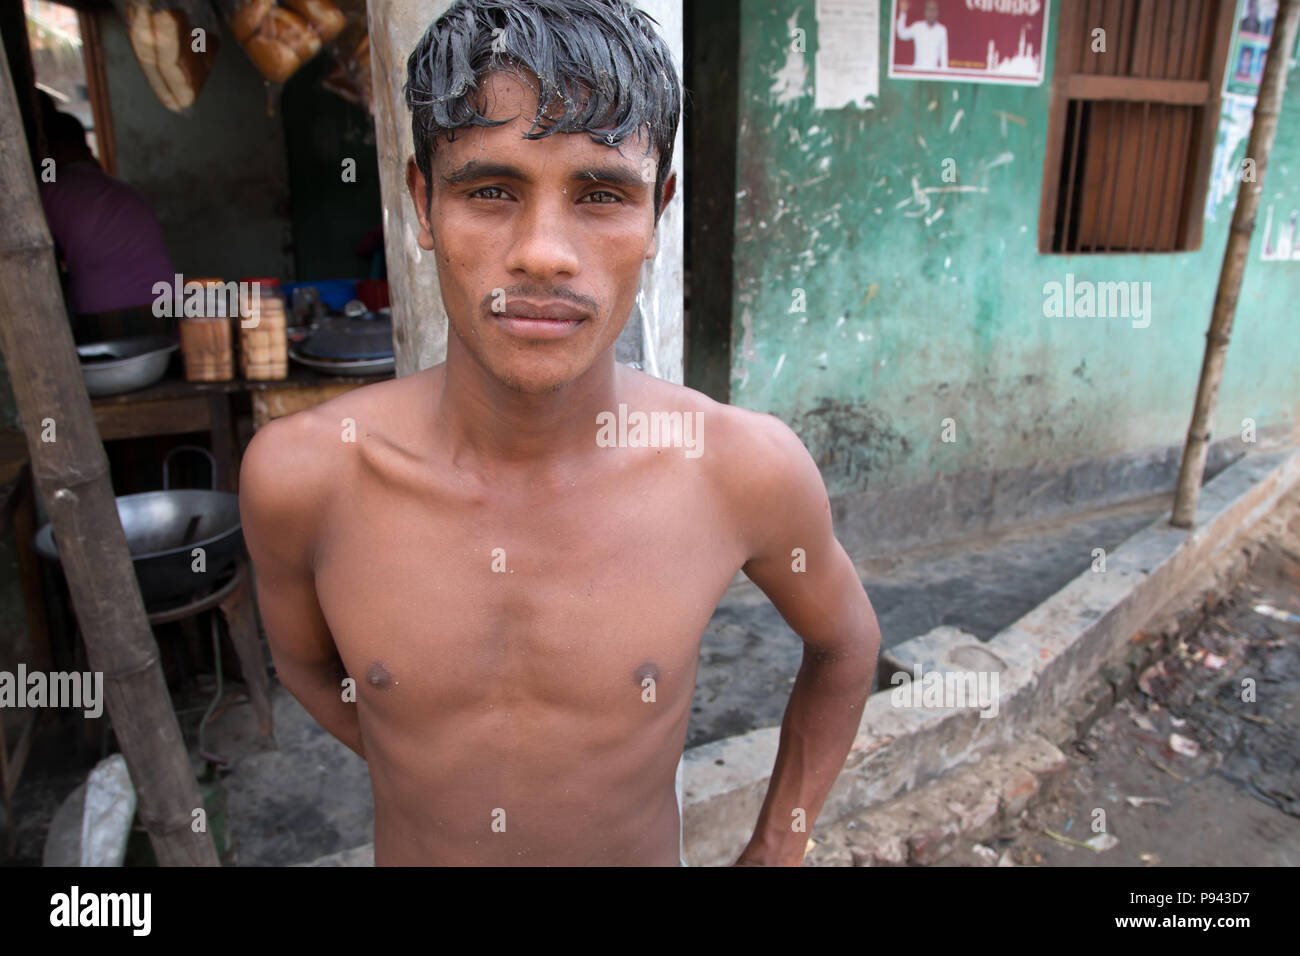 Worker in in Hazaribagh tannery, Dhaka, Bangladesh Stock Photo